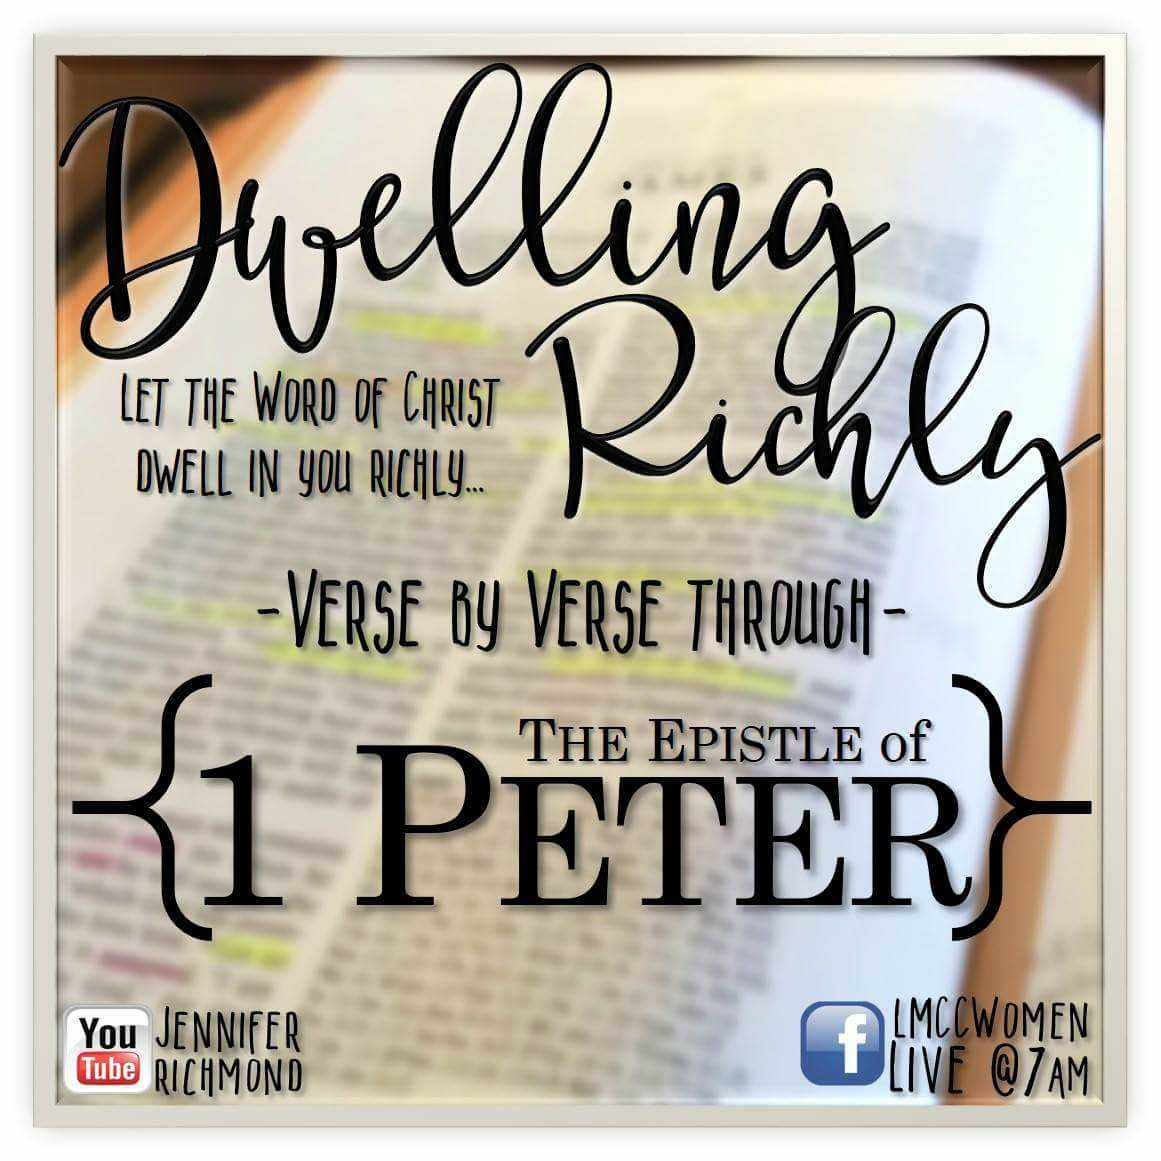 1 Peter 5:1-14